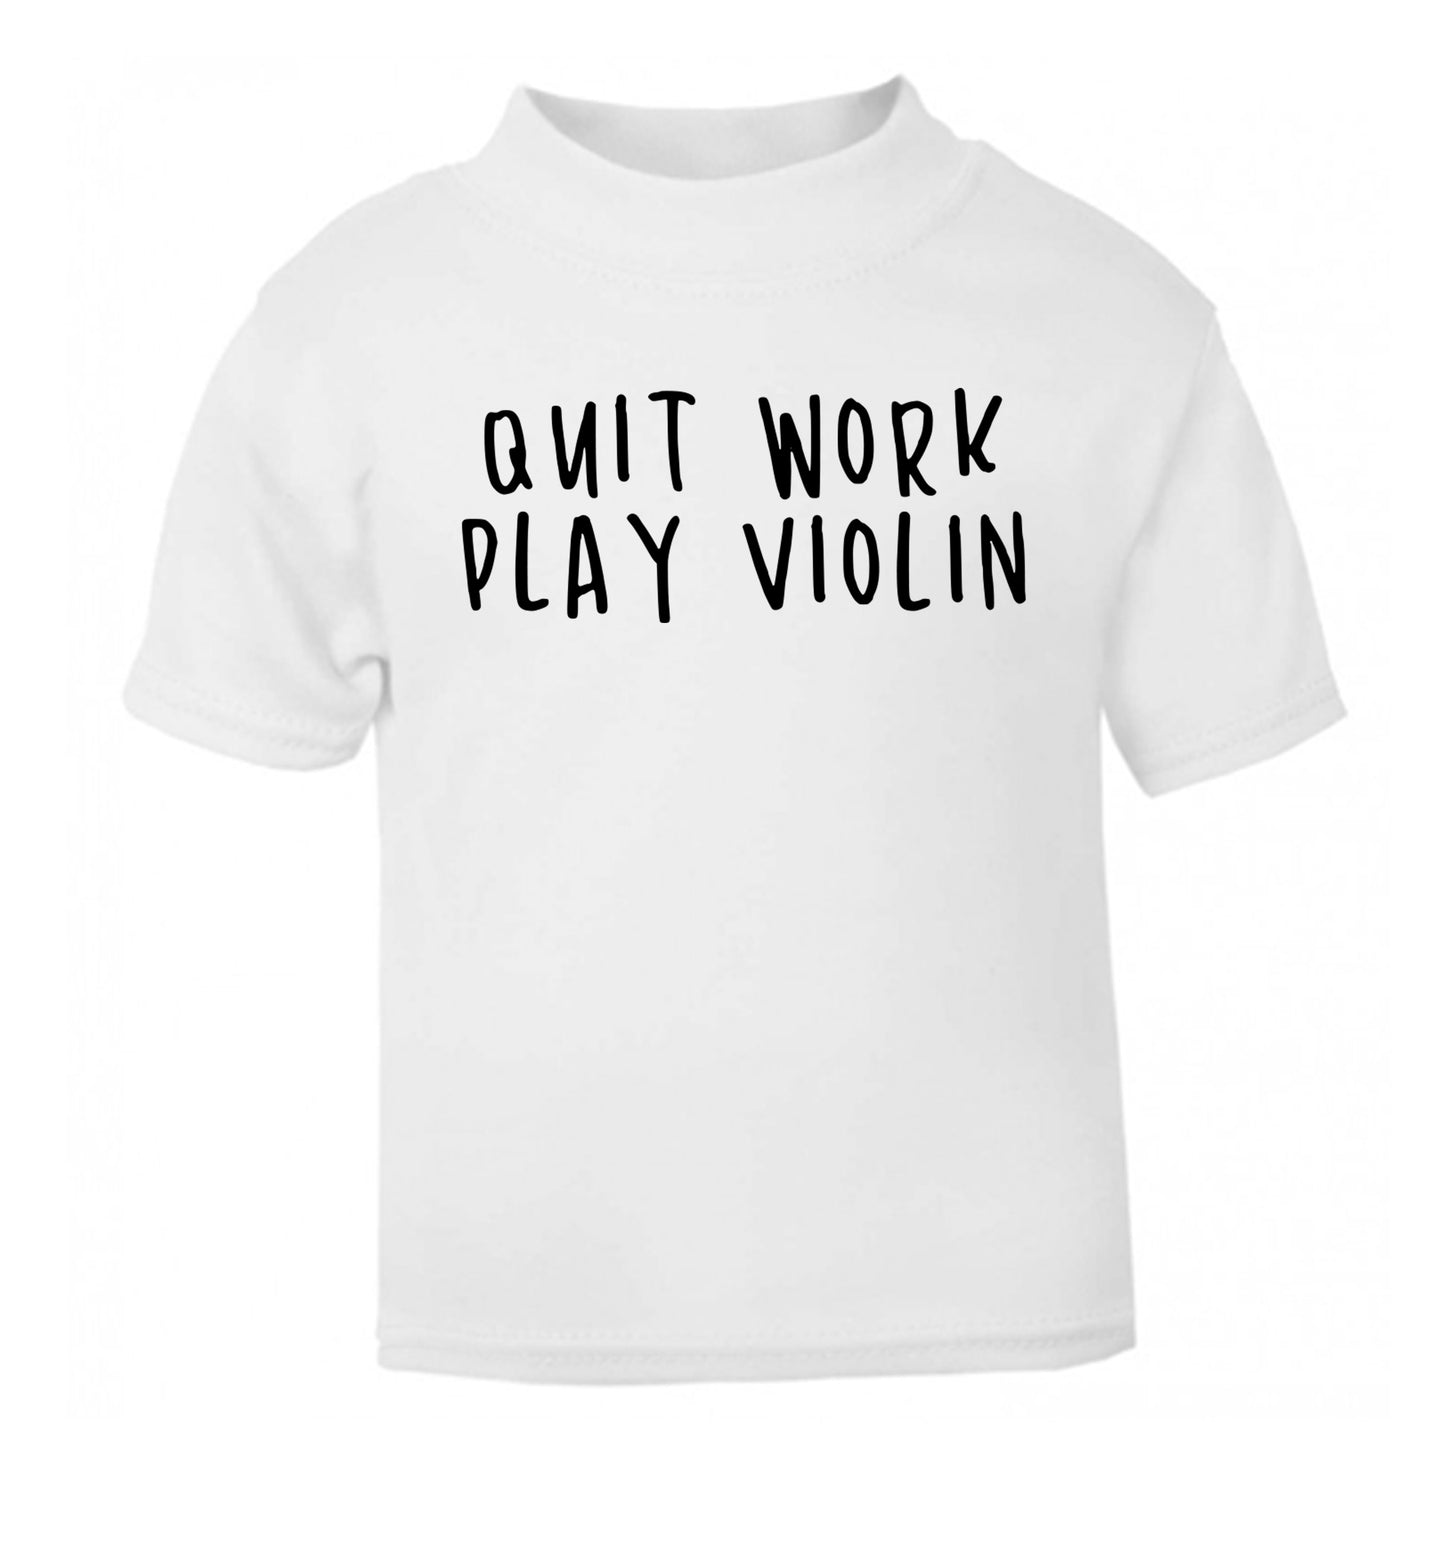 Quit work play violin white Baby Toddler Tshirt 2 Years